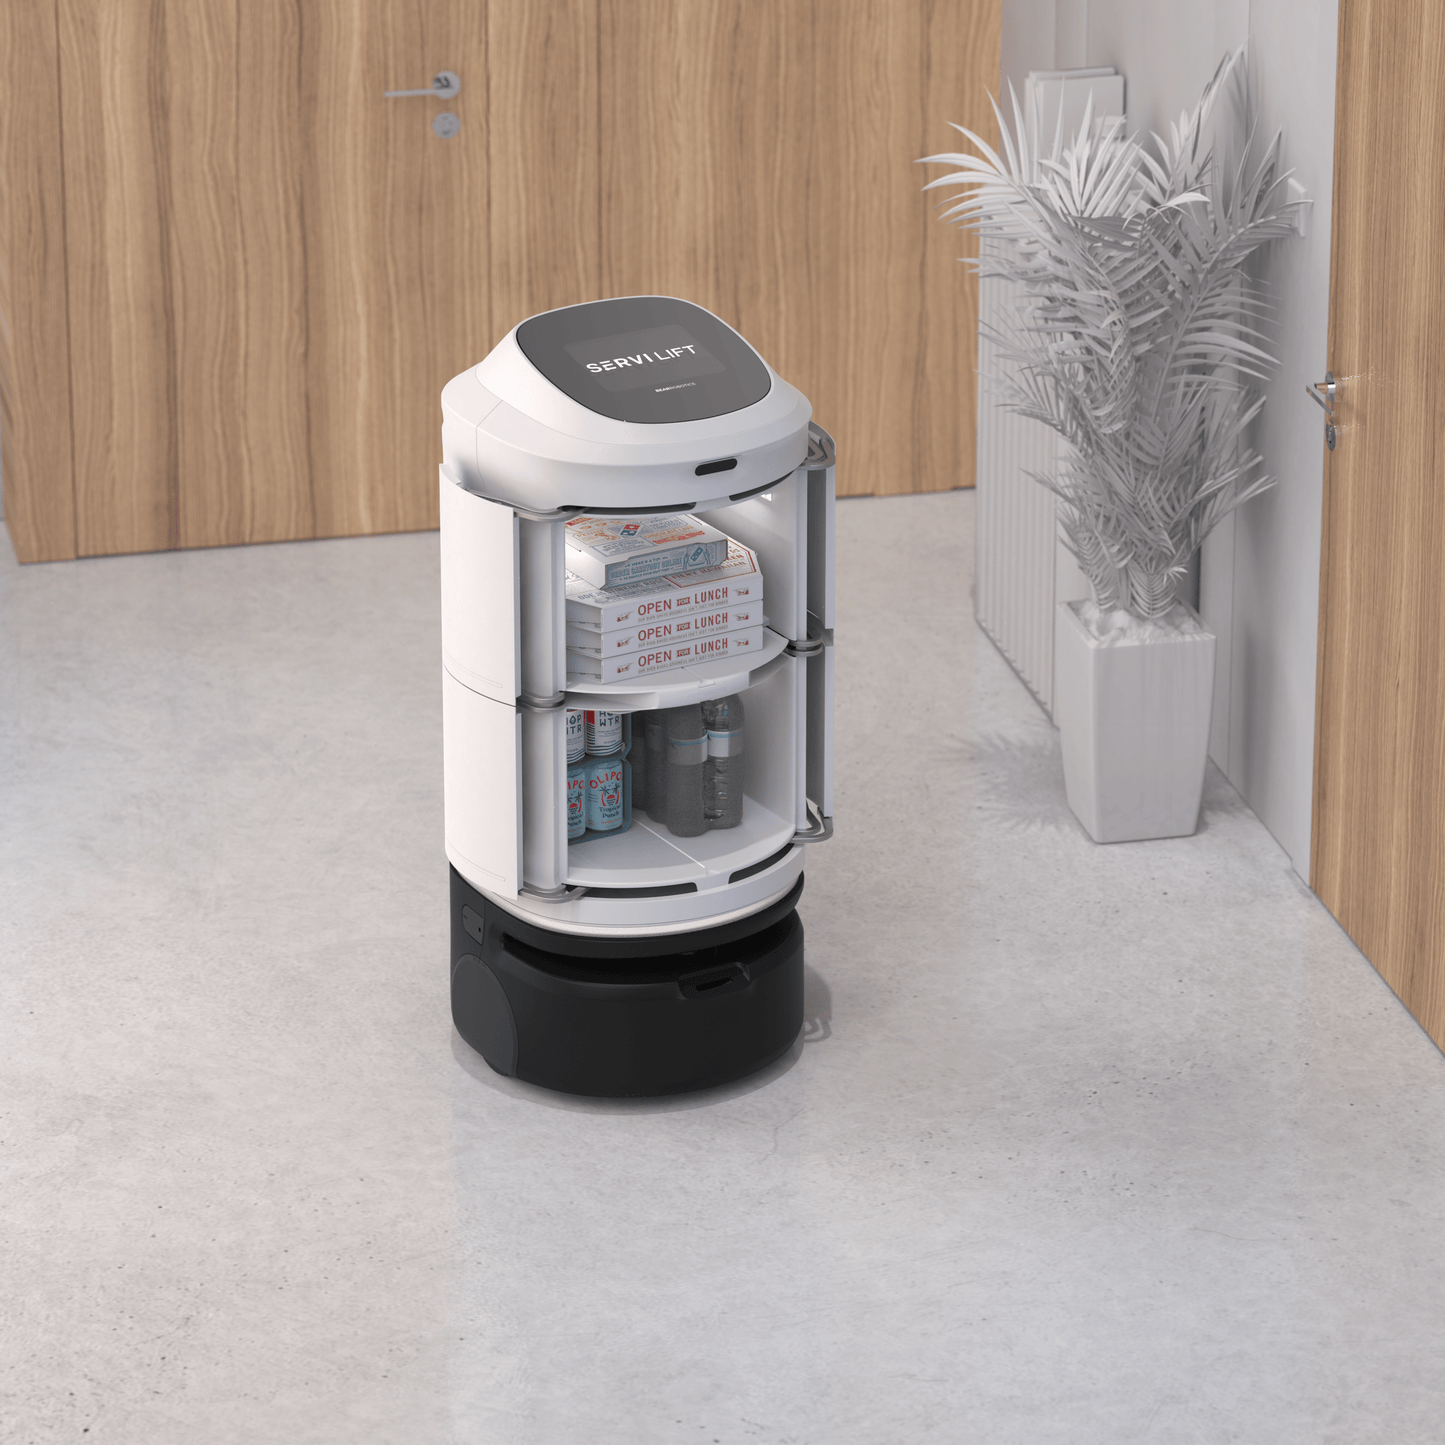 Servi Lift - The Hotel Robot